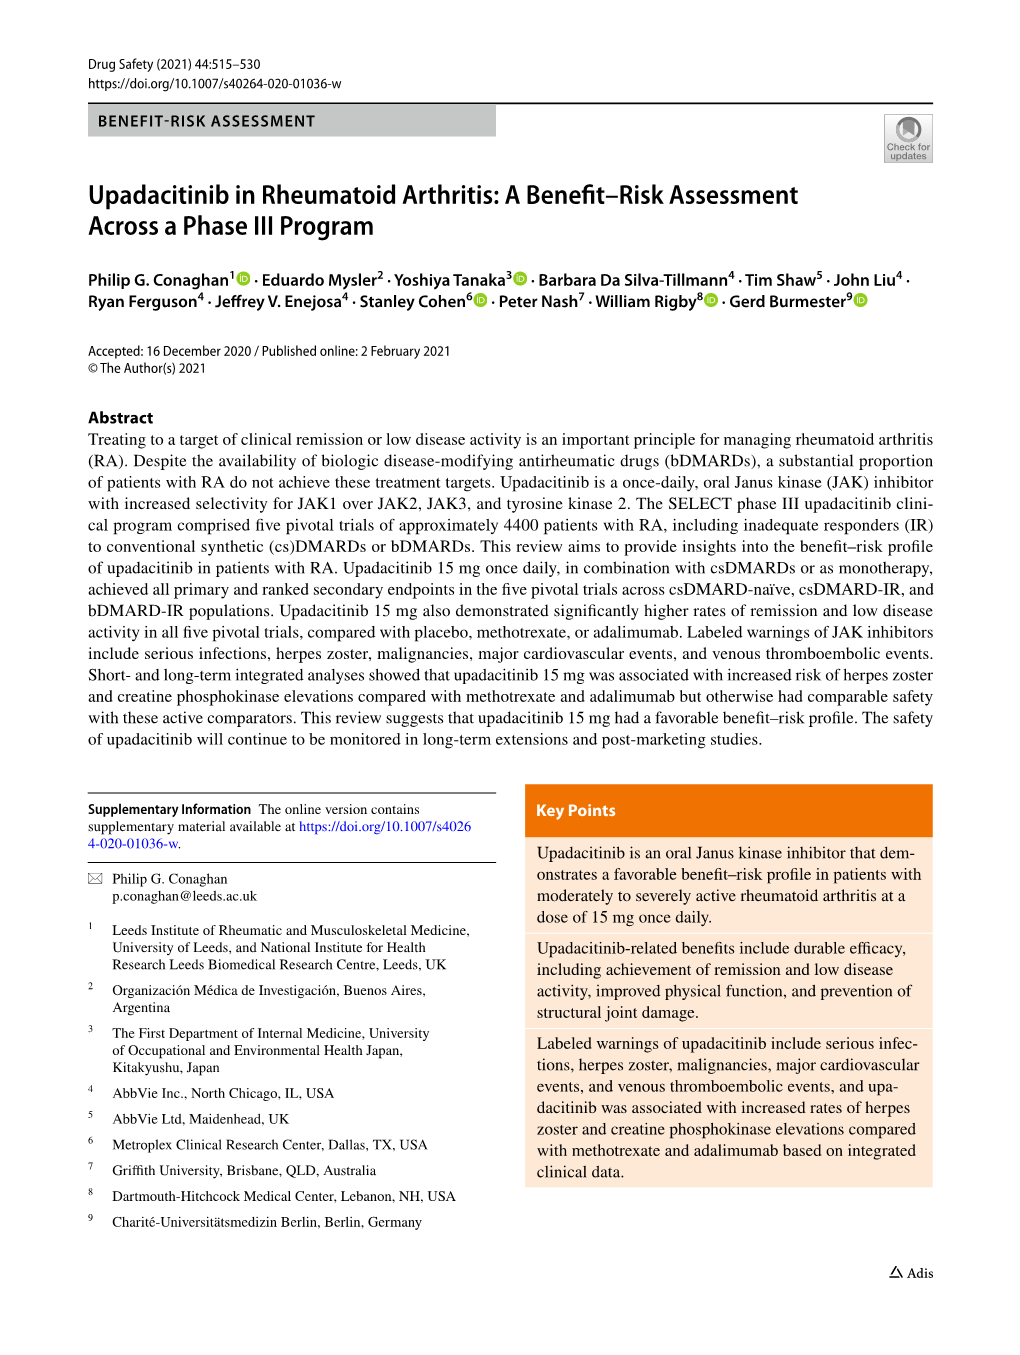 Upadacitinib in Rheumatoid Arthritis: a Benefit–Risk Assessment Across